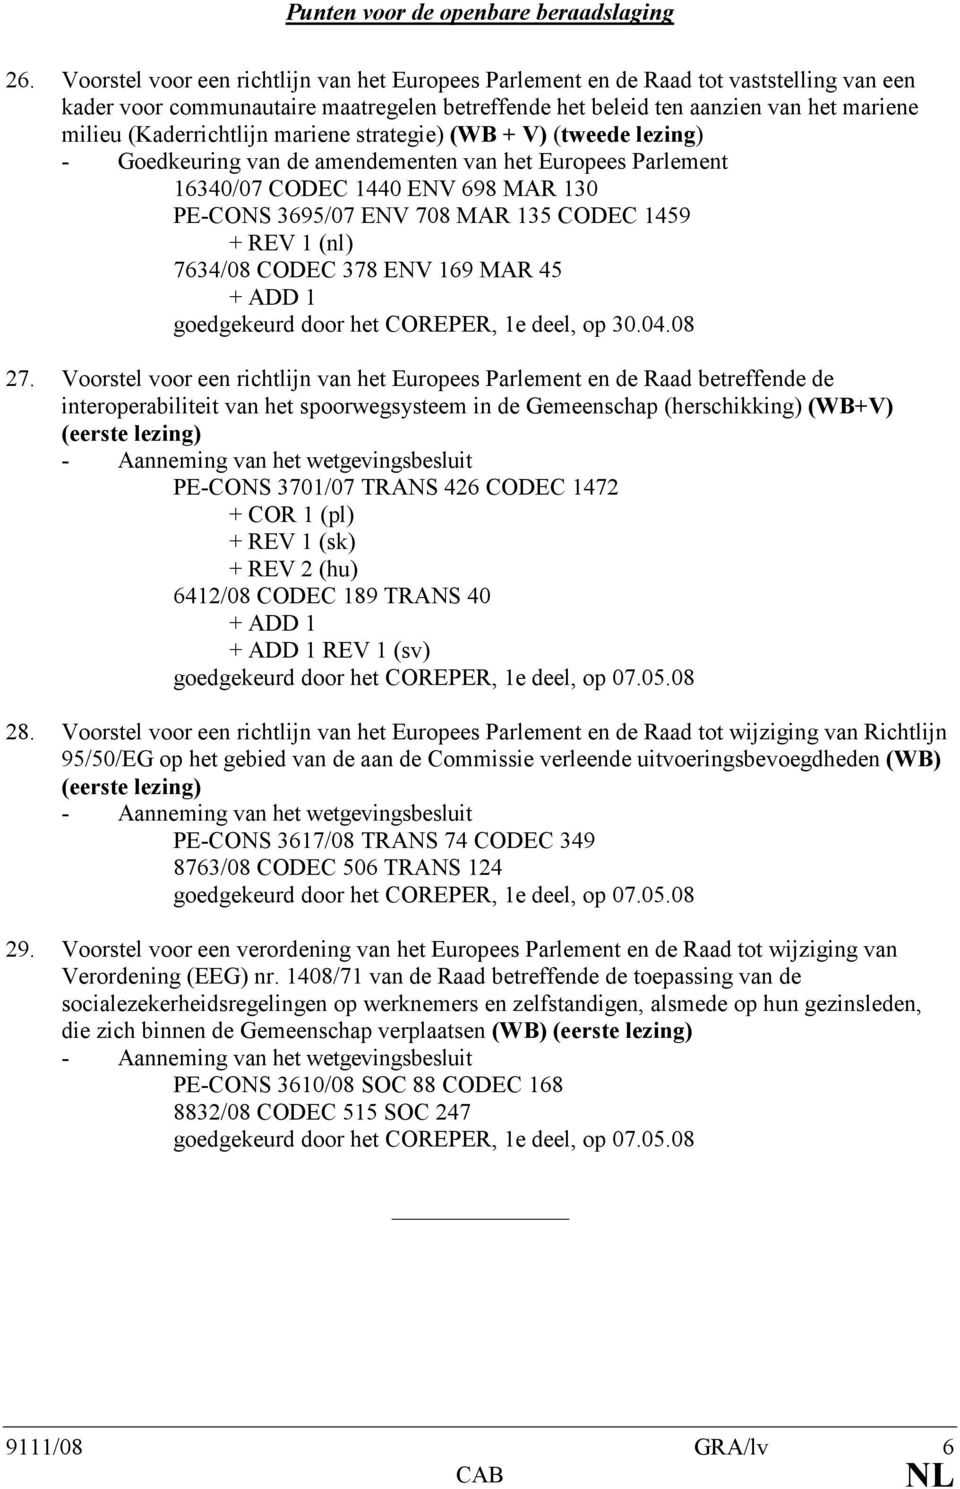 (Kaderrichtlijn mariene strategie) (WB + V) (tweede lezing) - Goedkeuring van de amendementen van het Europees Parlement 16340/07 CODEC 1440 ENV 698 MAR 130 PE-CONS 3695/07 ENV 708 MAR 135 CODEC 1459